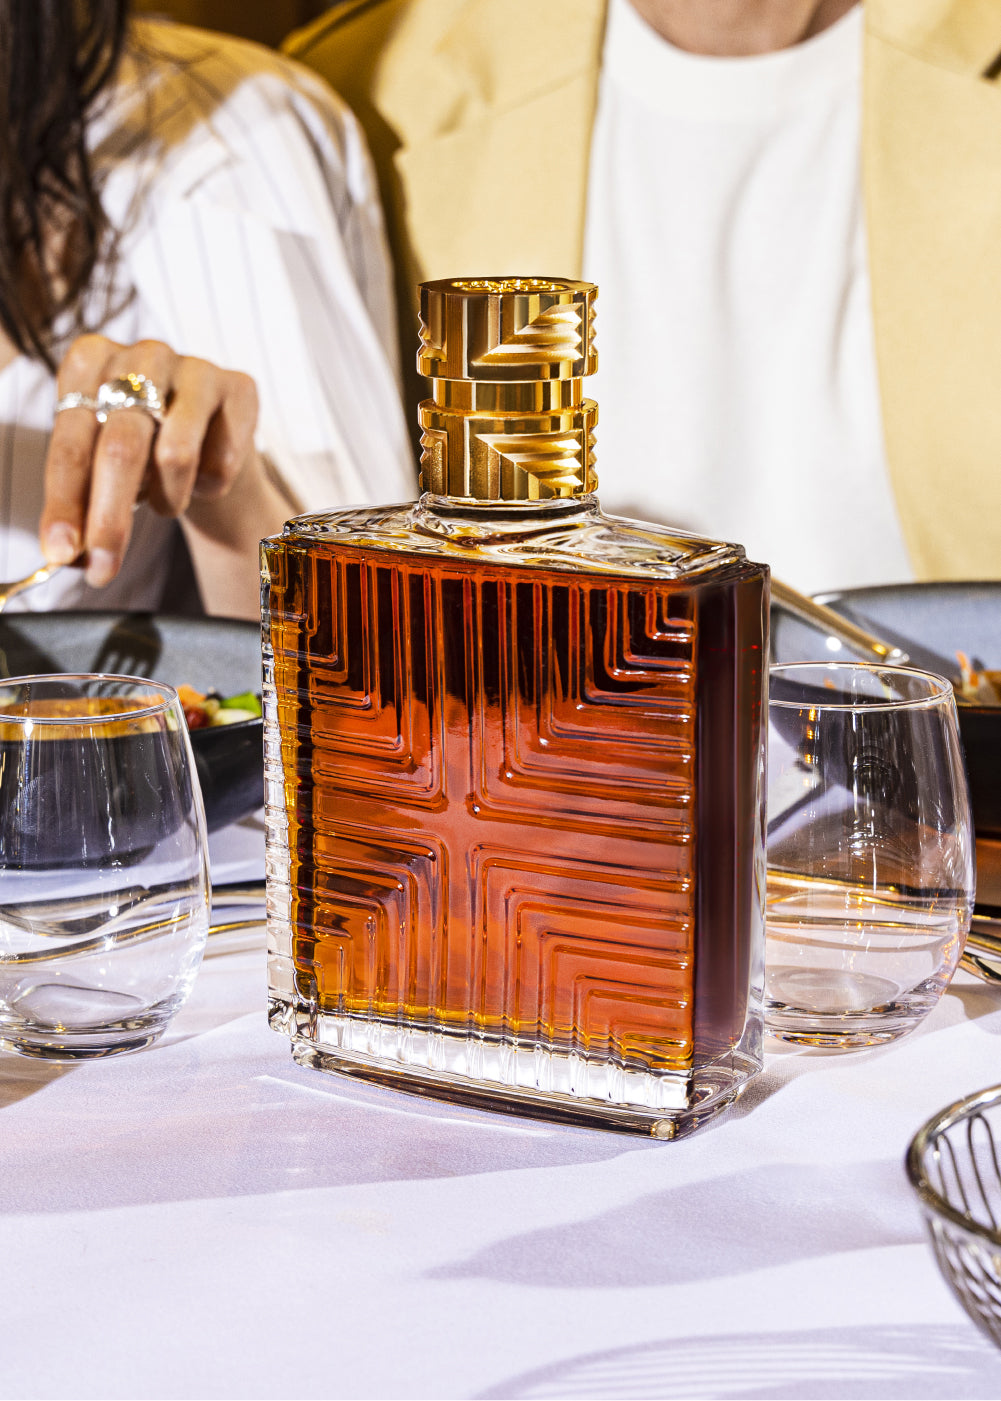 Camus Cognac - Made to Measure Luxury Cognac - Independent Since